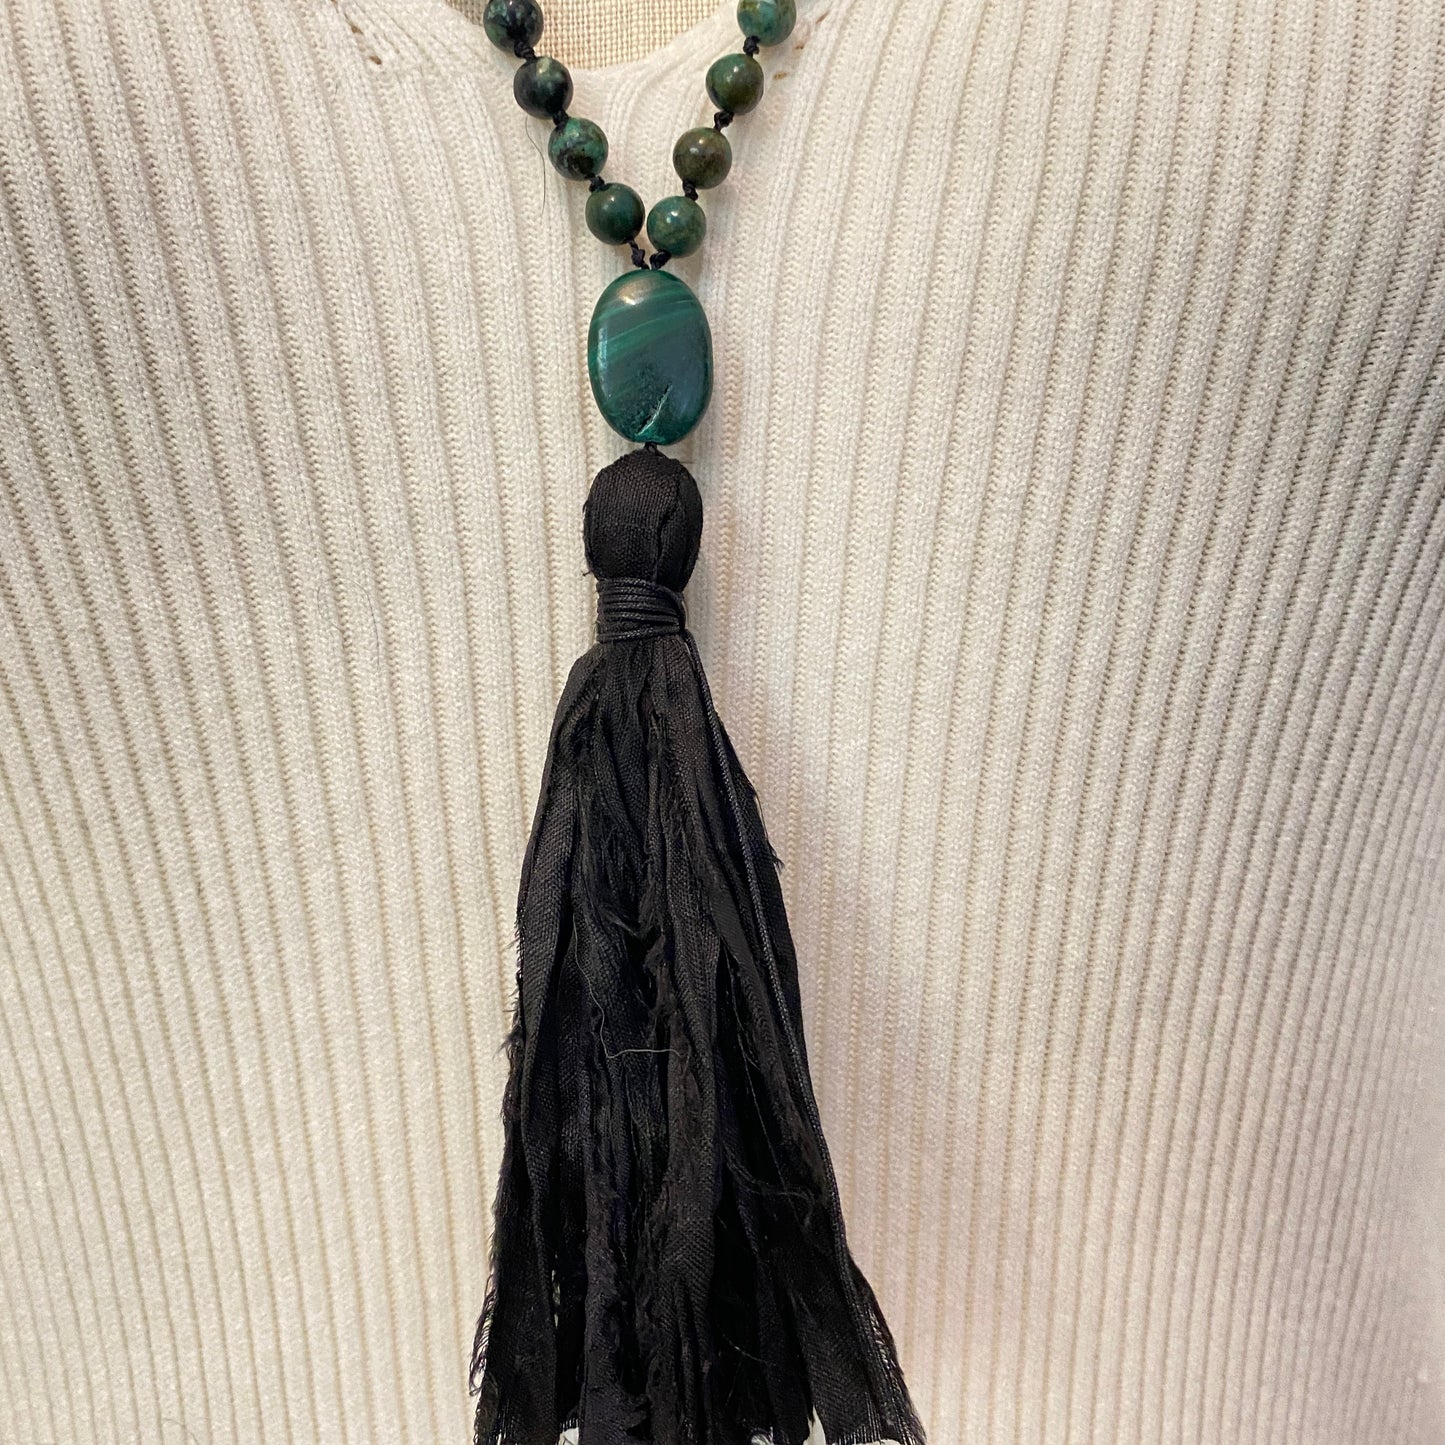 African Jasper / Malachite Beaded Necklace with Bracelet